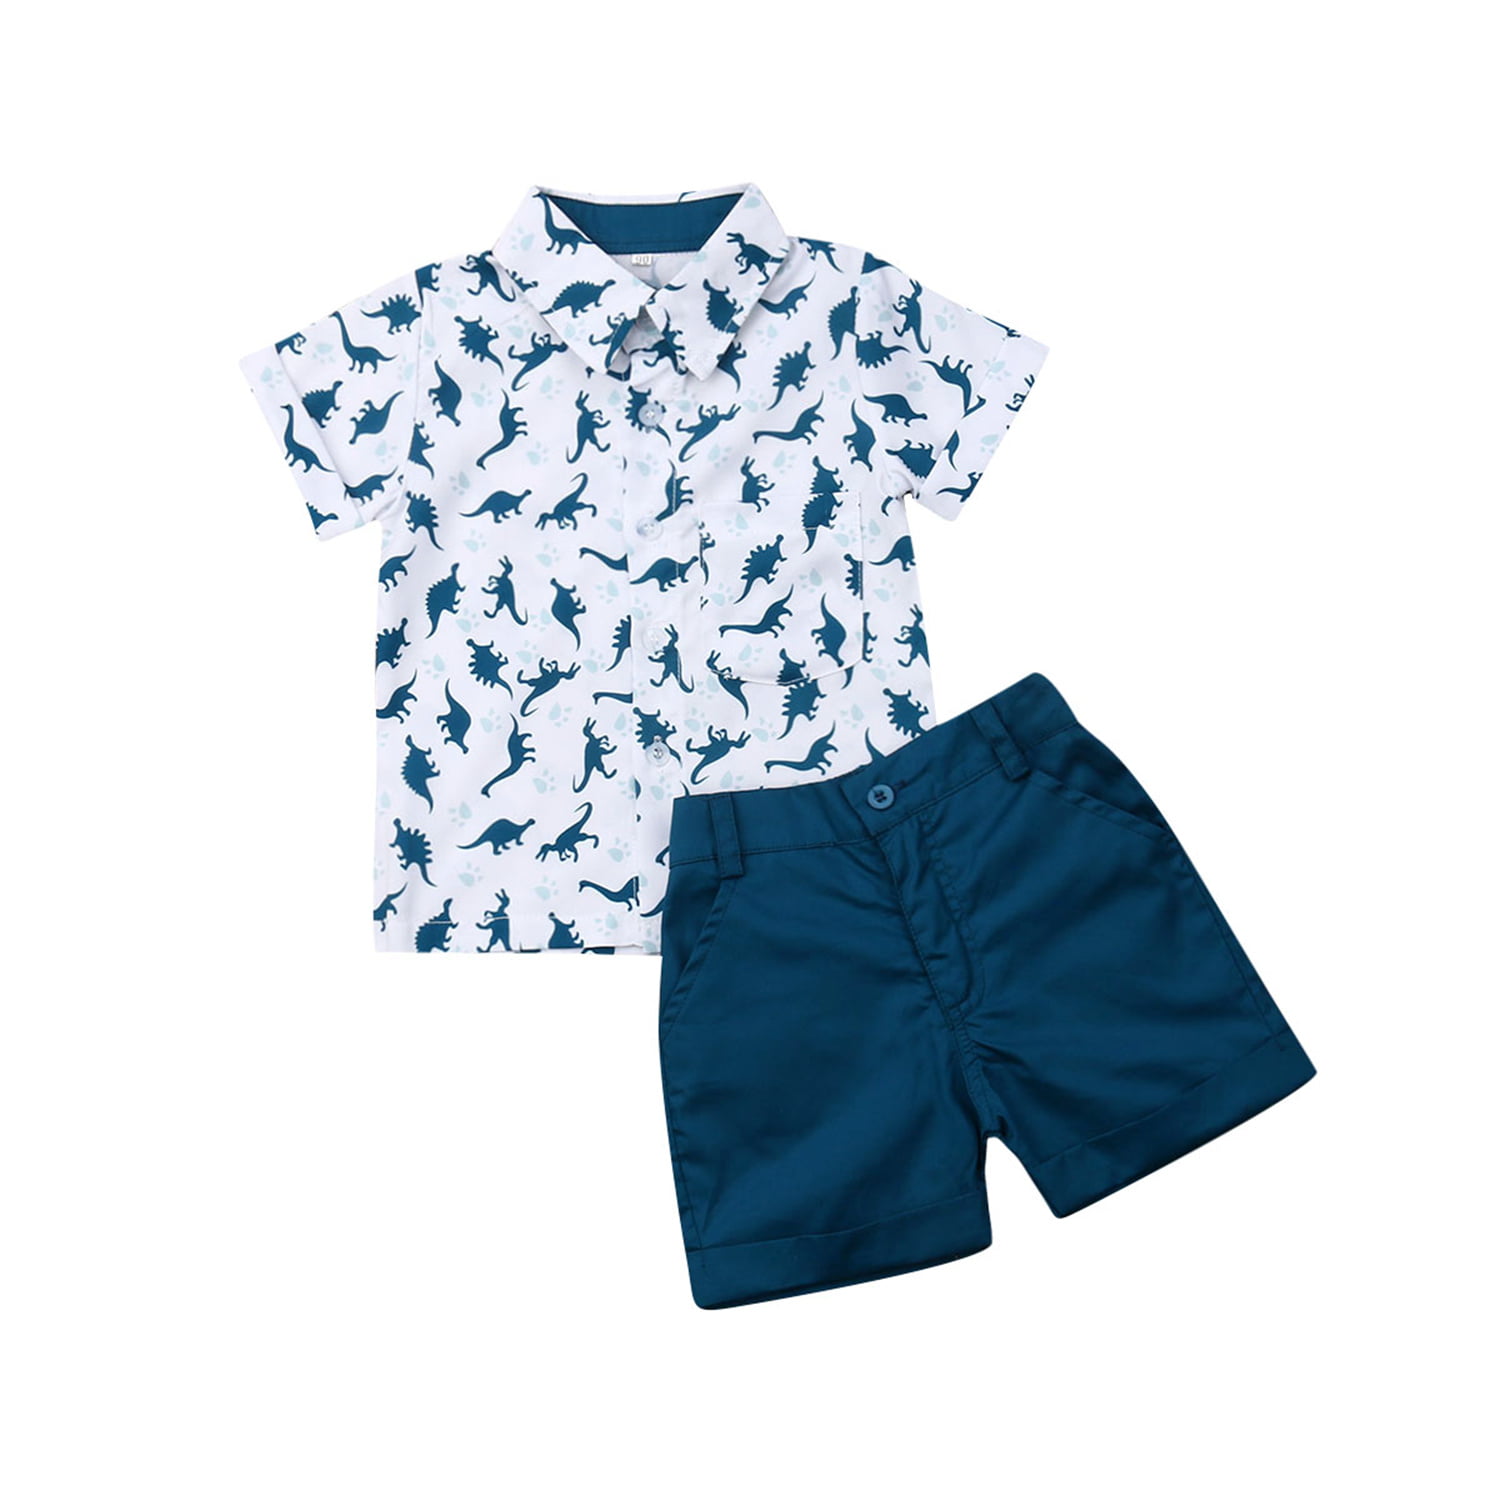 2Pcs Toddler Kids Baby Boys Dinosaur Print Tops+Shorts Outfits Clothes Sets 